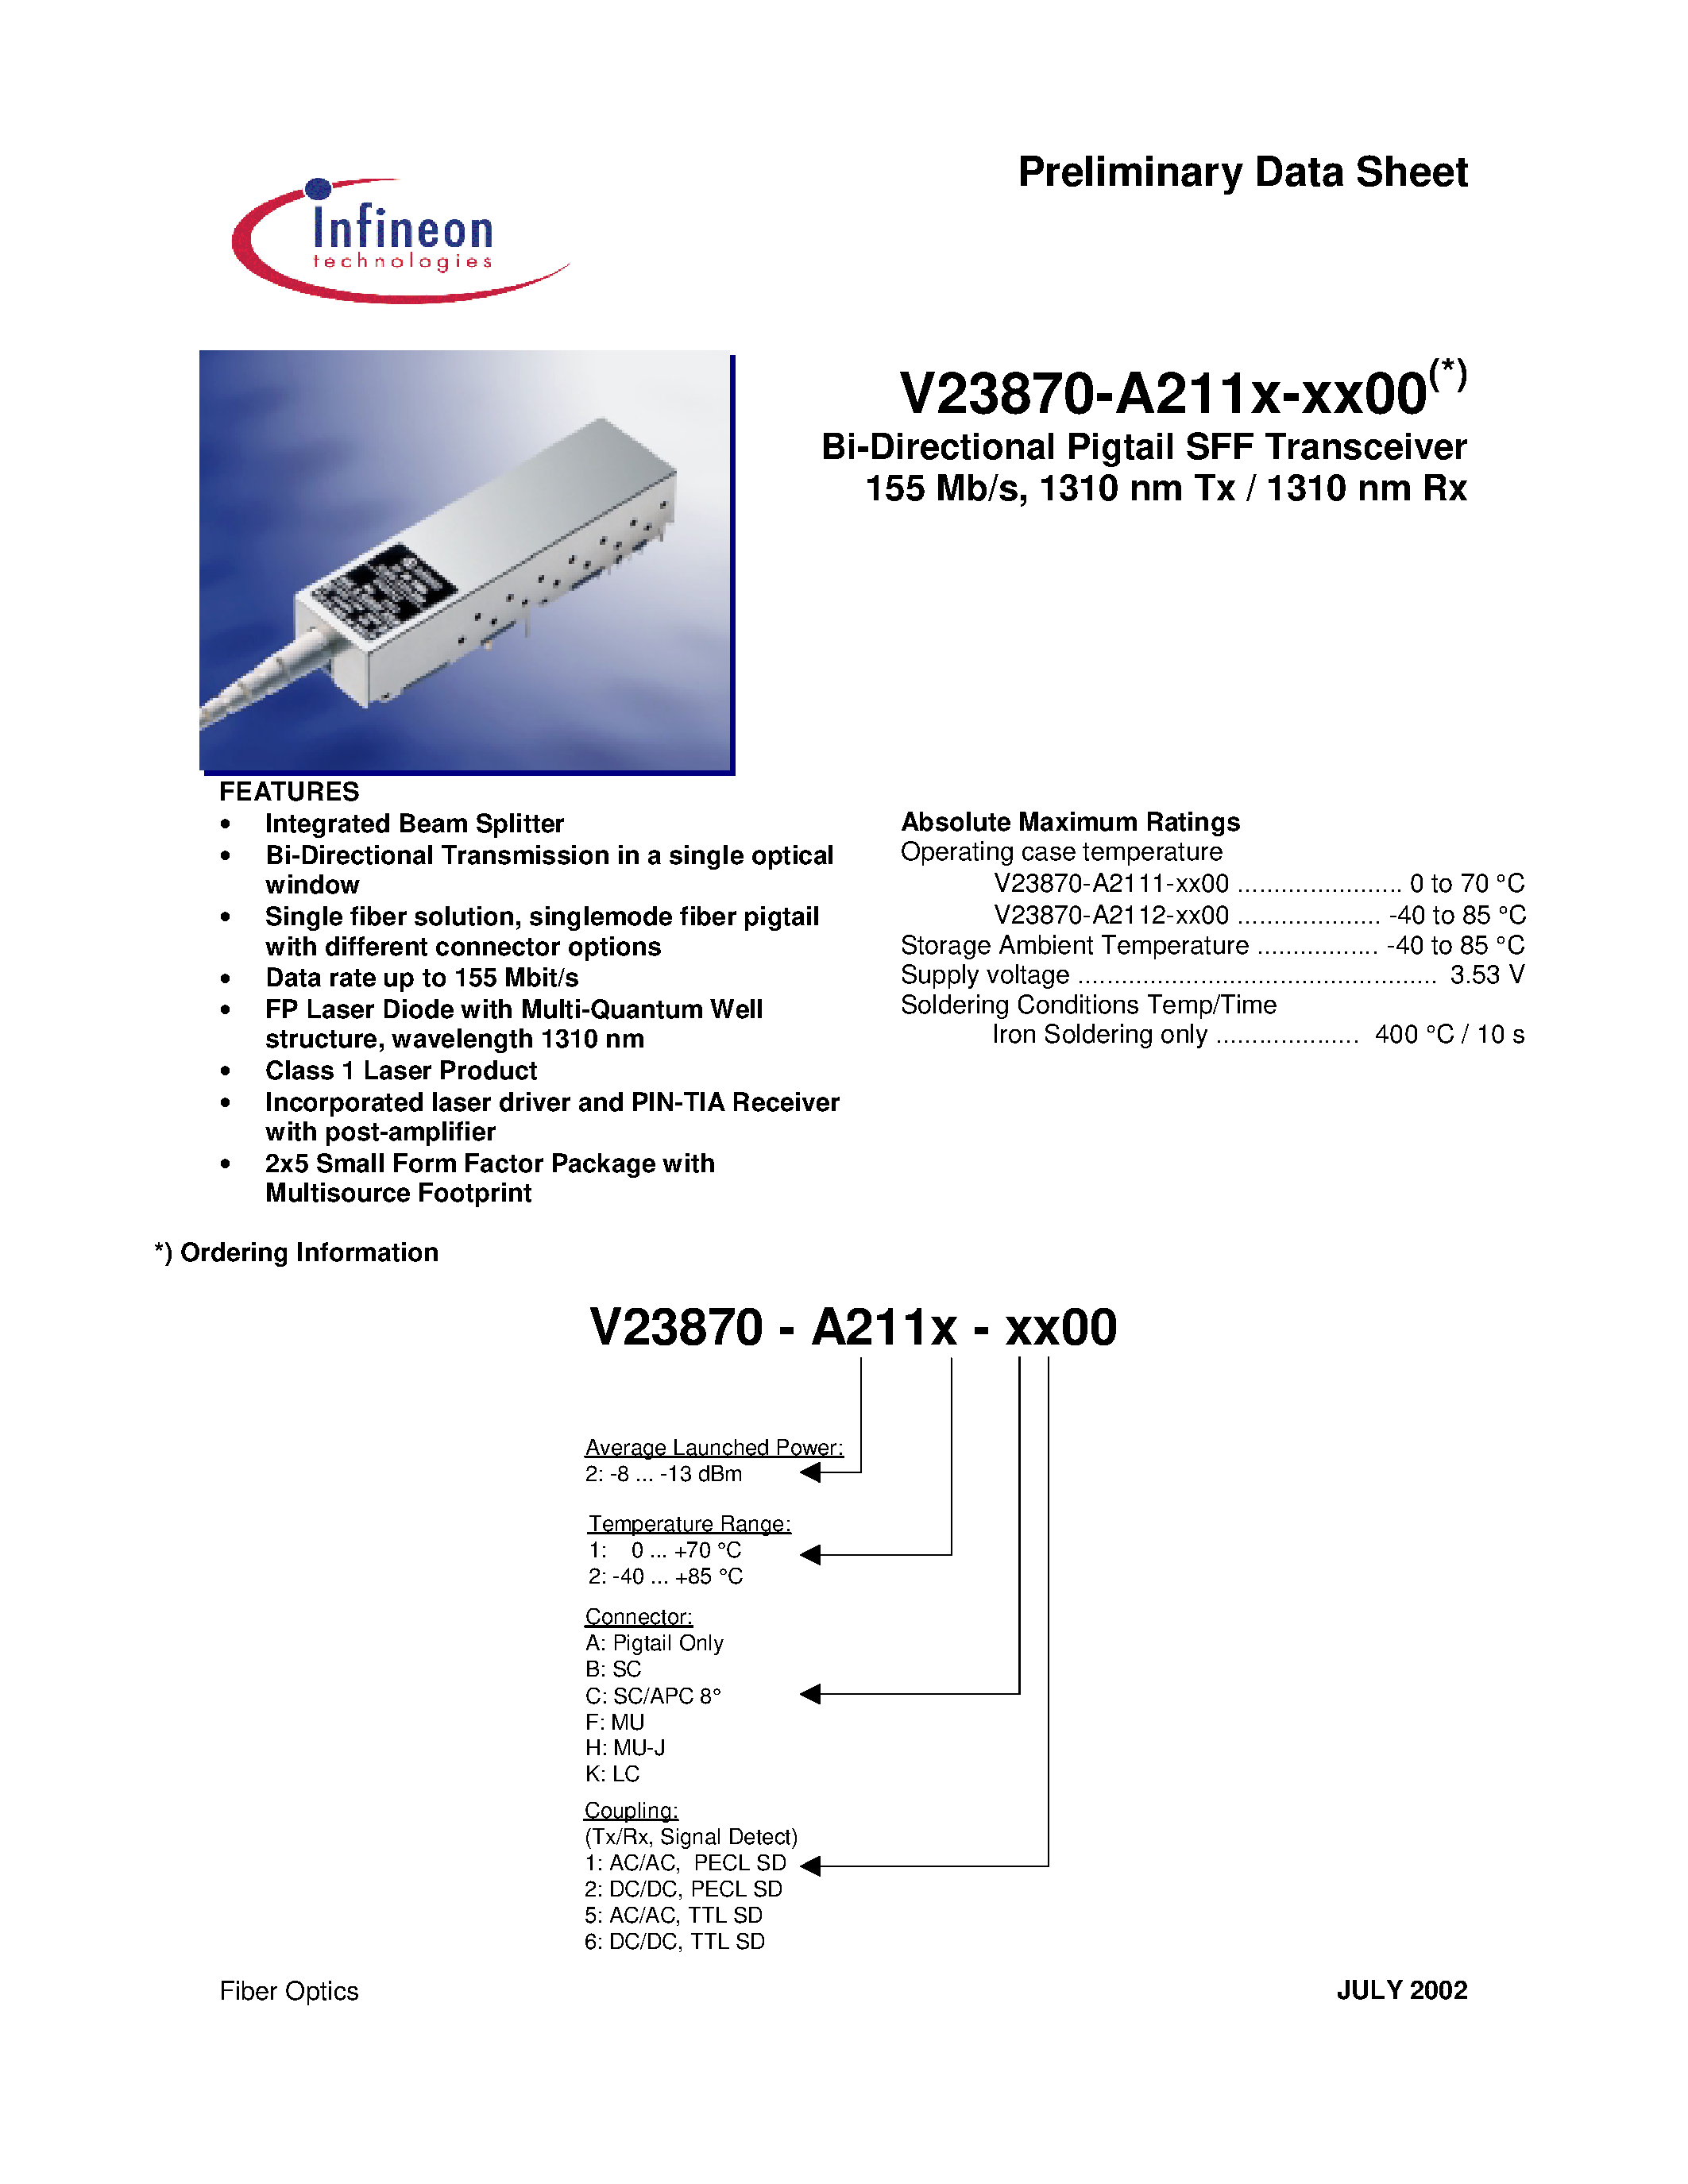 Даташит V23870-A2111-H100 - Bi-Directional Pigtail SFF Transceiver 155 Mb/s/ 1310 nm Tx / 1310 nm Rx страница 1